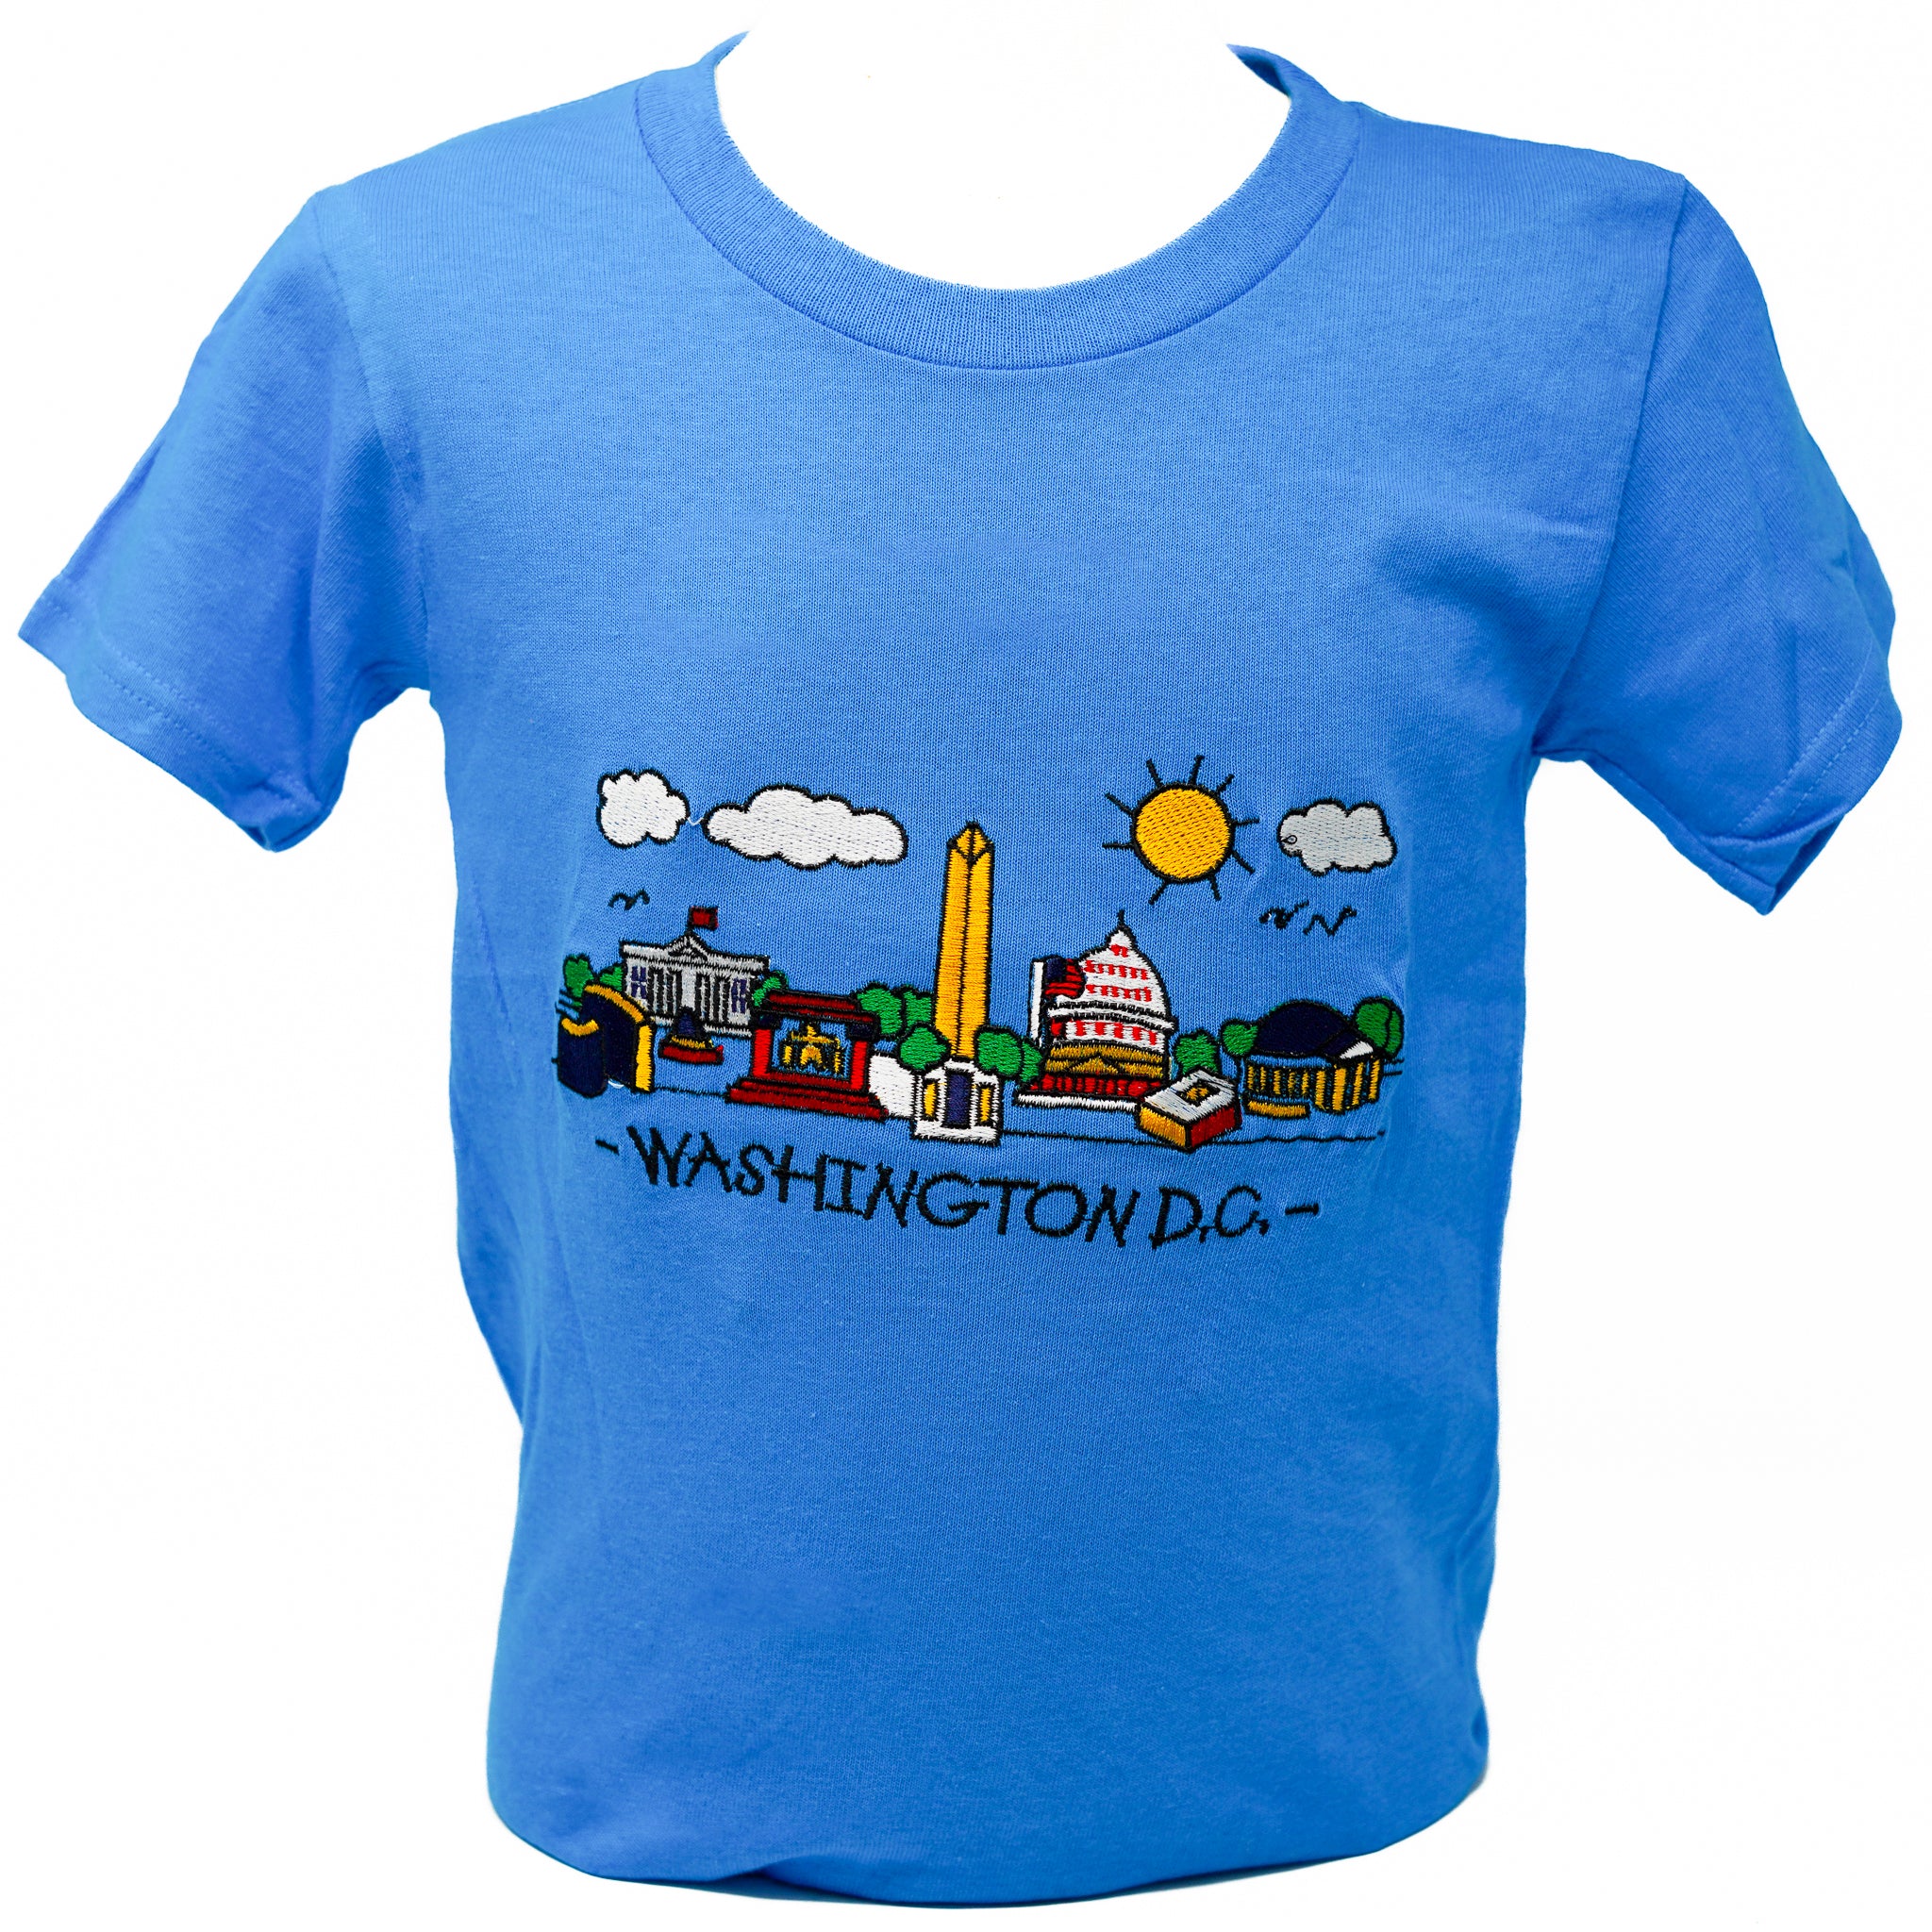 Washington D.C. Kids T-Shirt